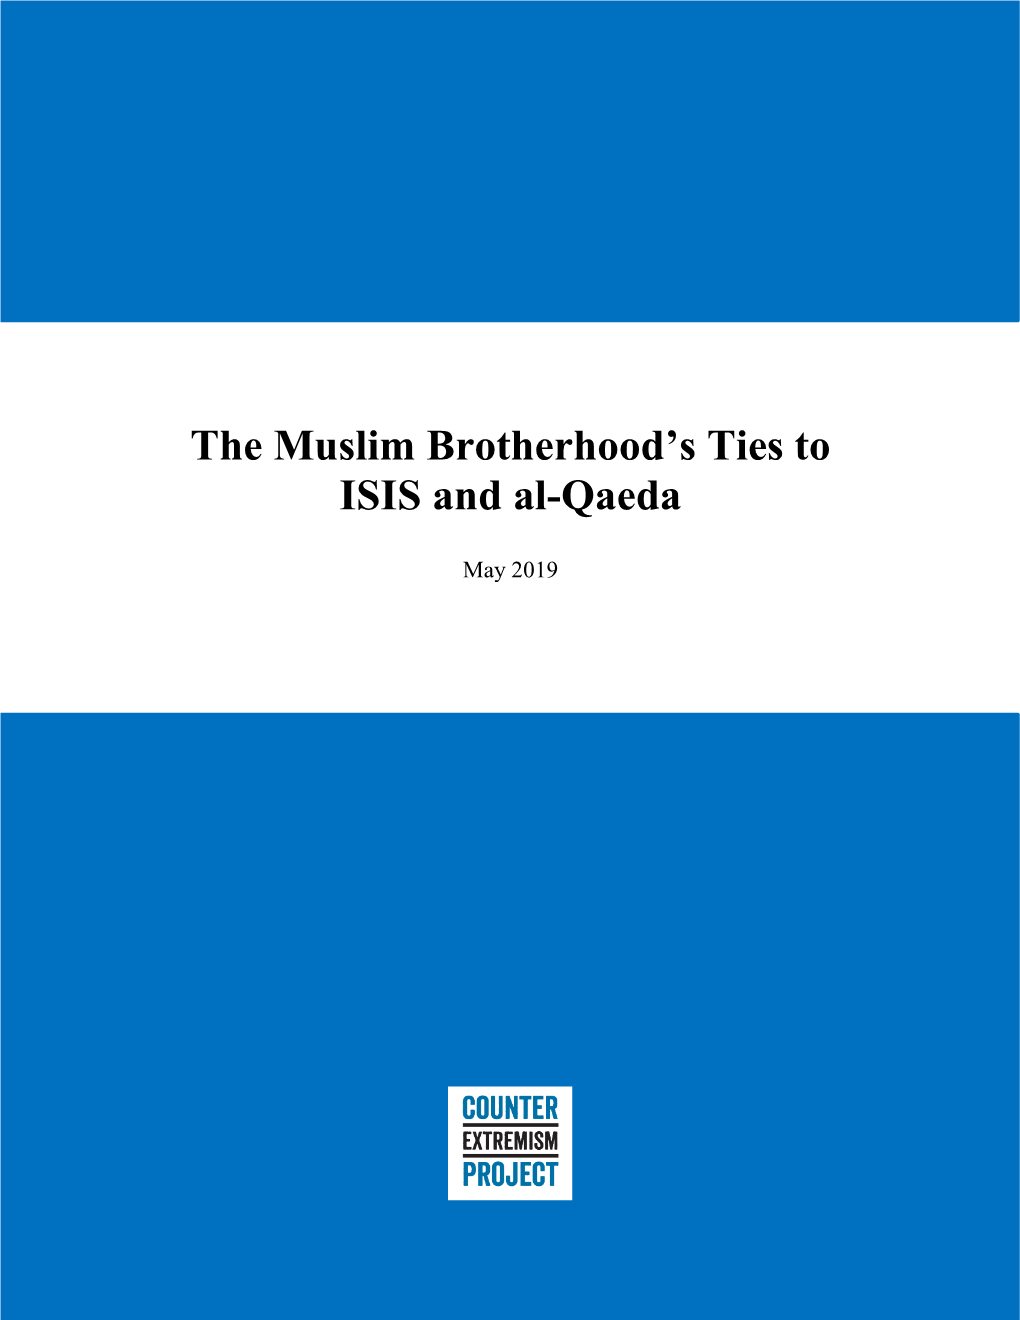 The Muslim Brotherhood's Ties to ISIS and Al-Qaeda